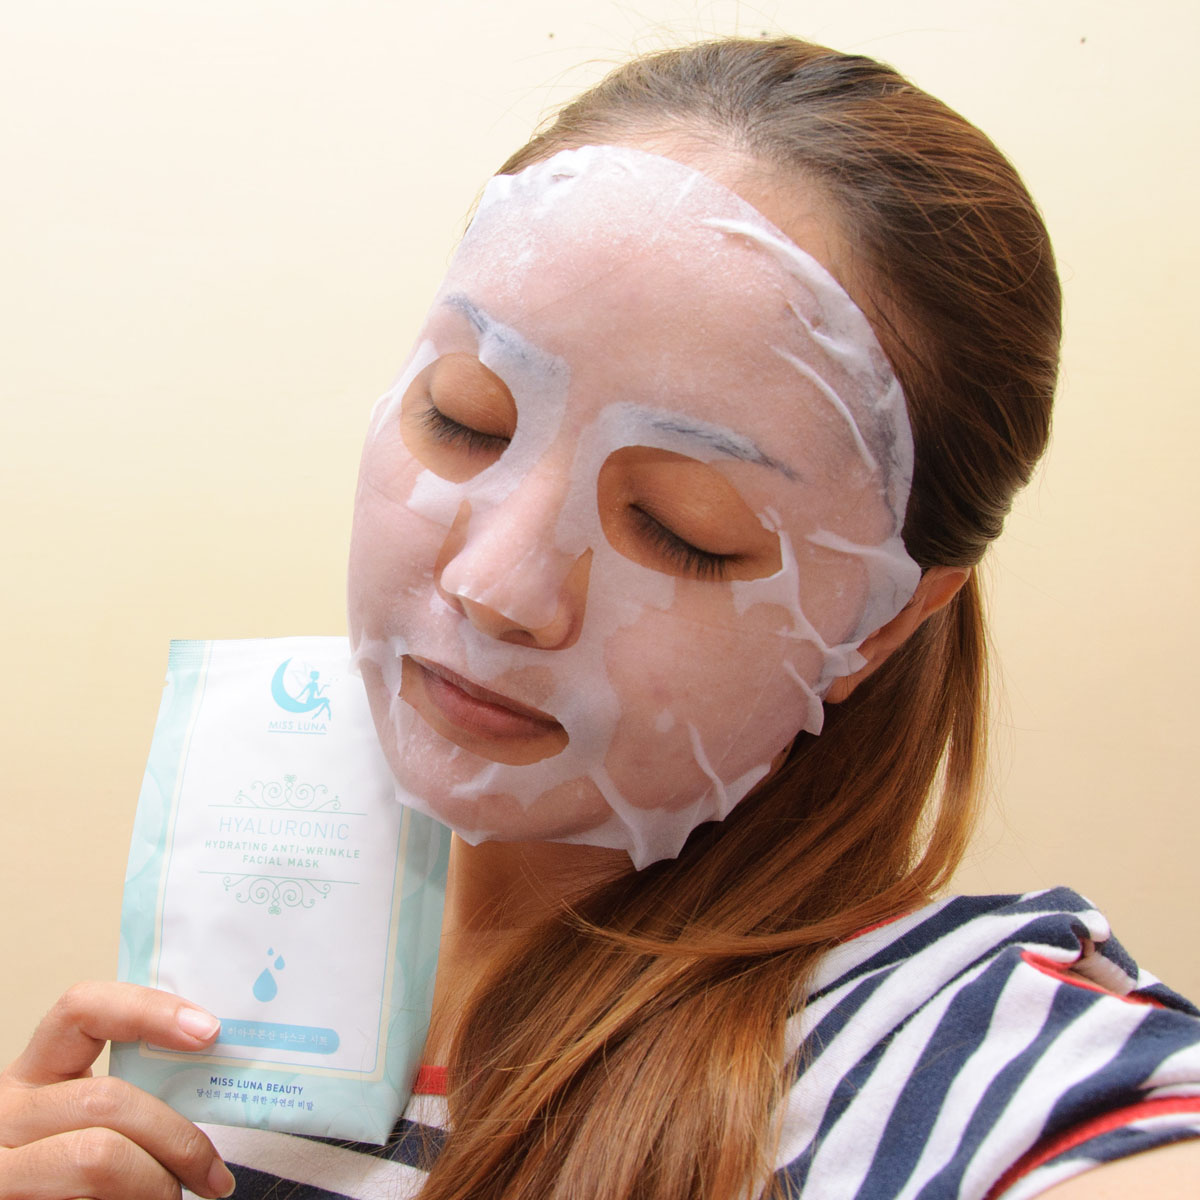 Miss Luna Beauty Facial Mask Review.